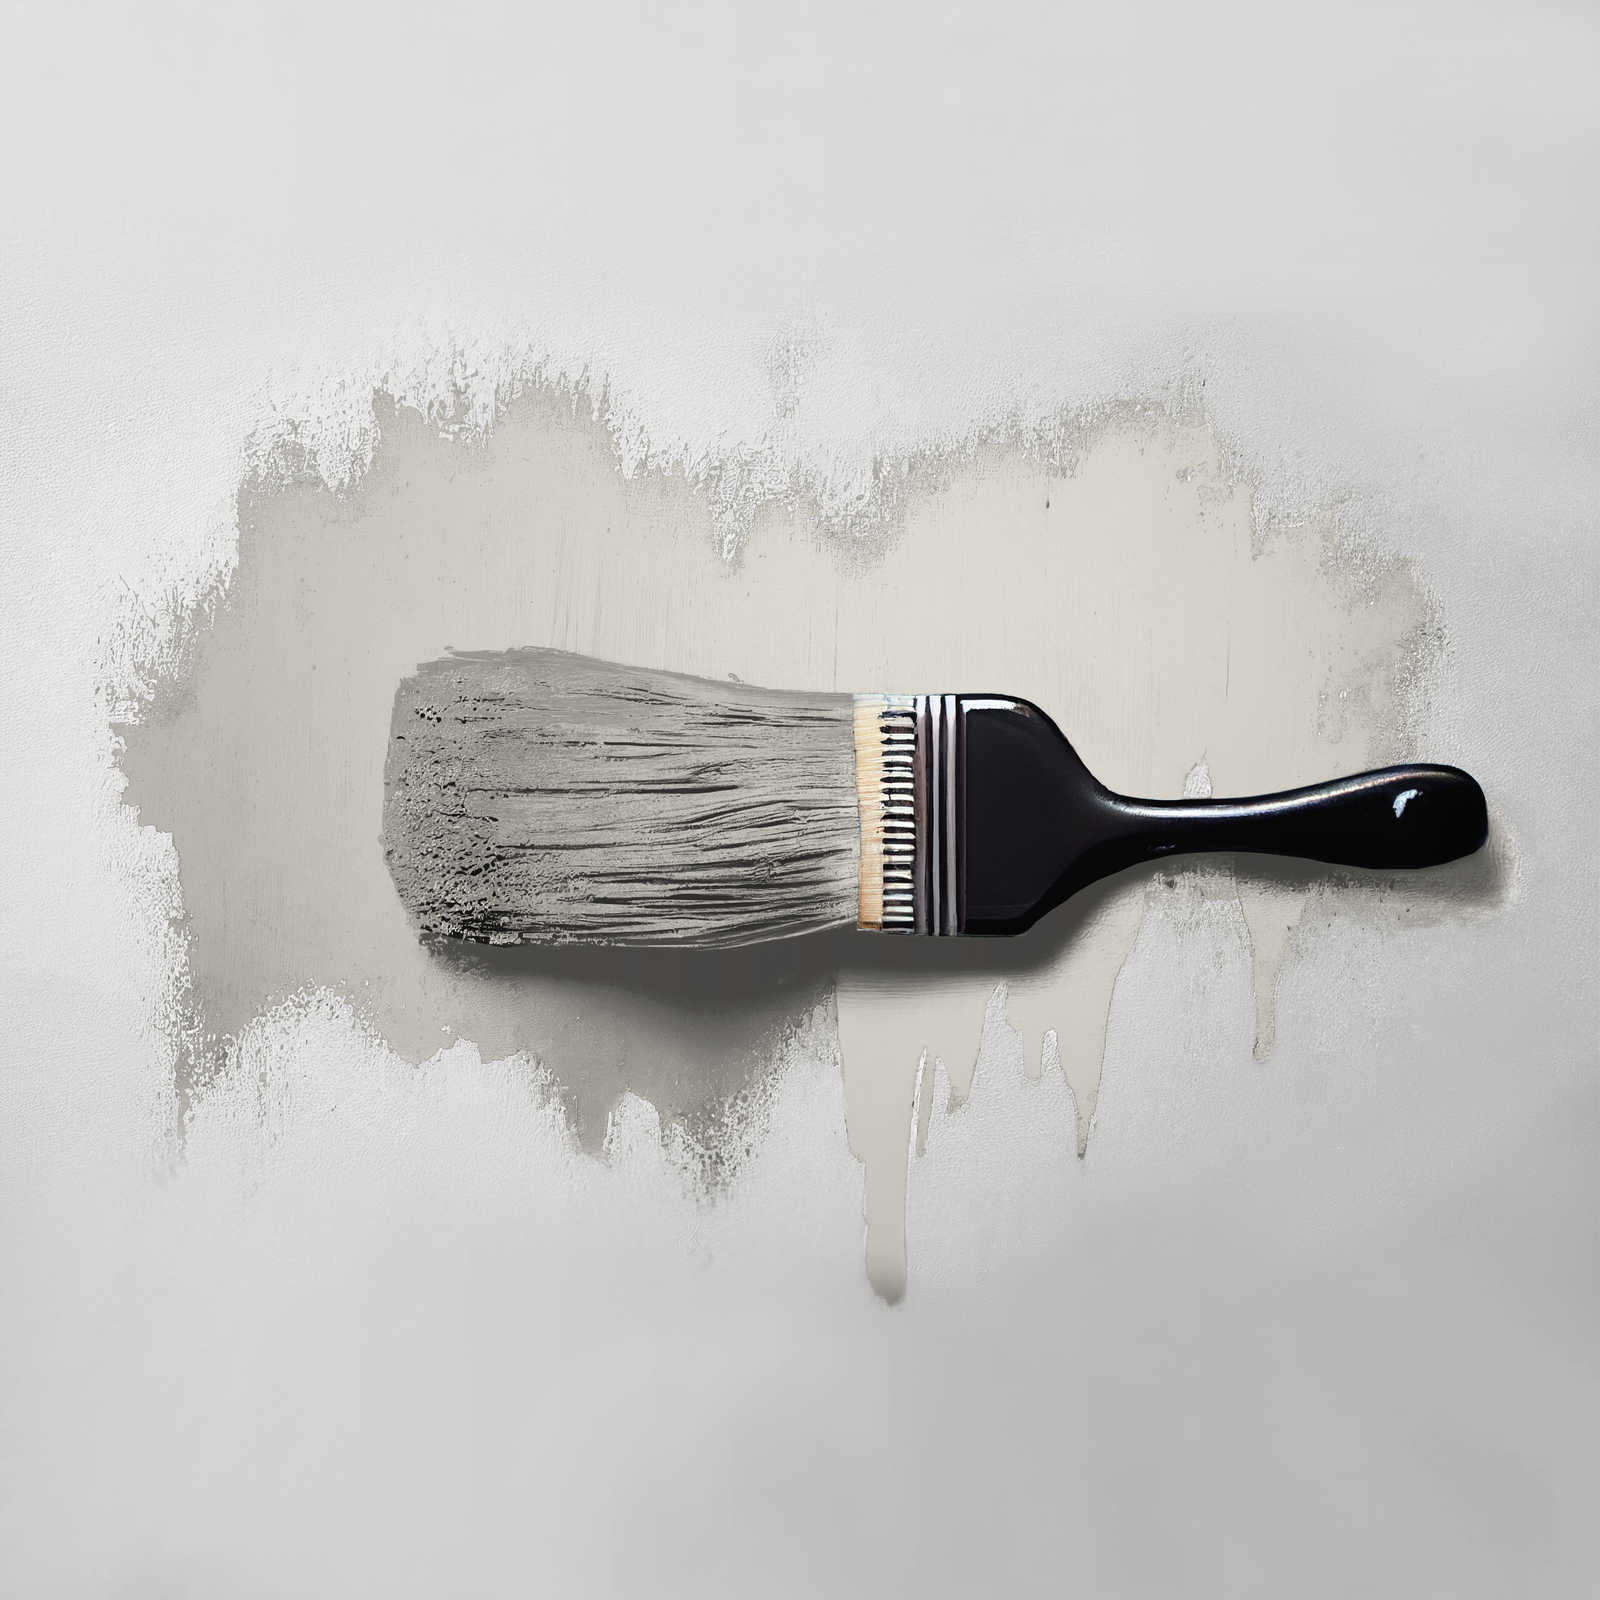             Pintura mural TCK1016 »Opened Oyster« en gris suave – 2,5 litro
        